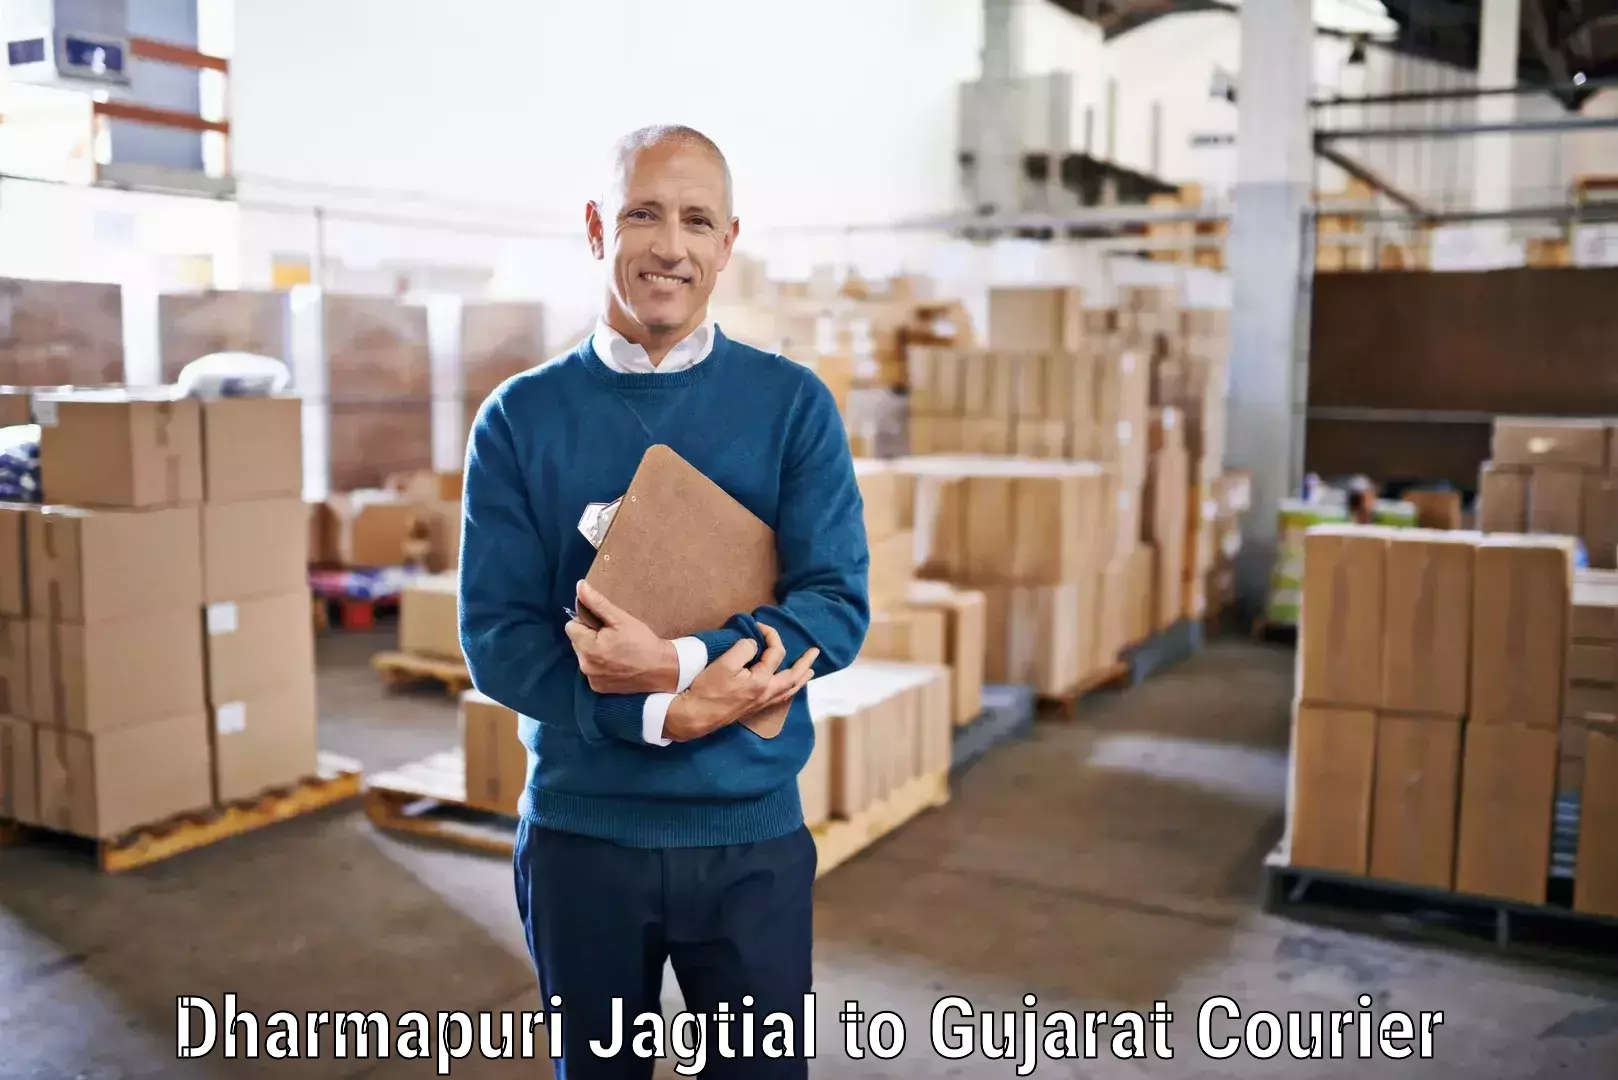 High-performance logistics Dharmapuri Jagtial to GIDC